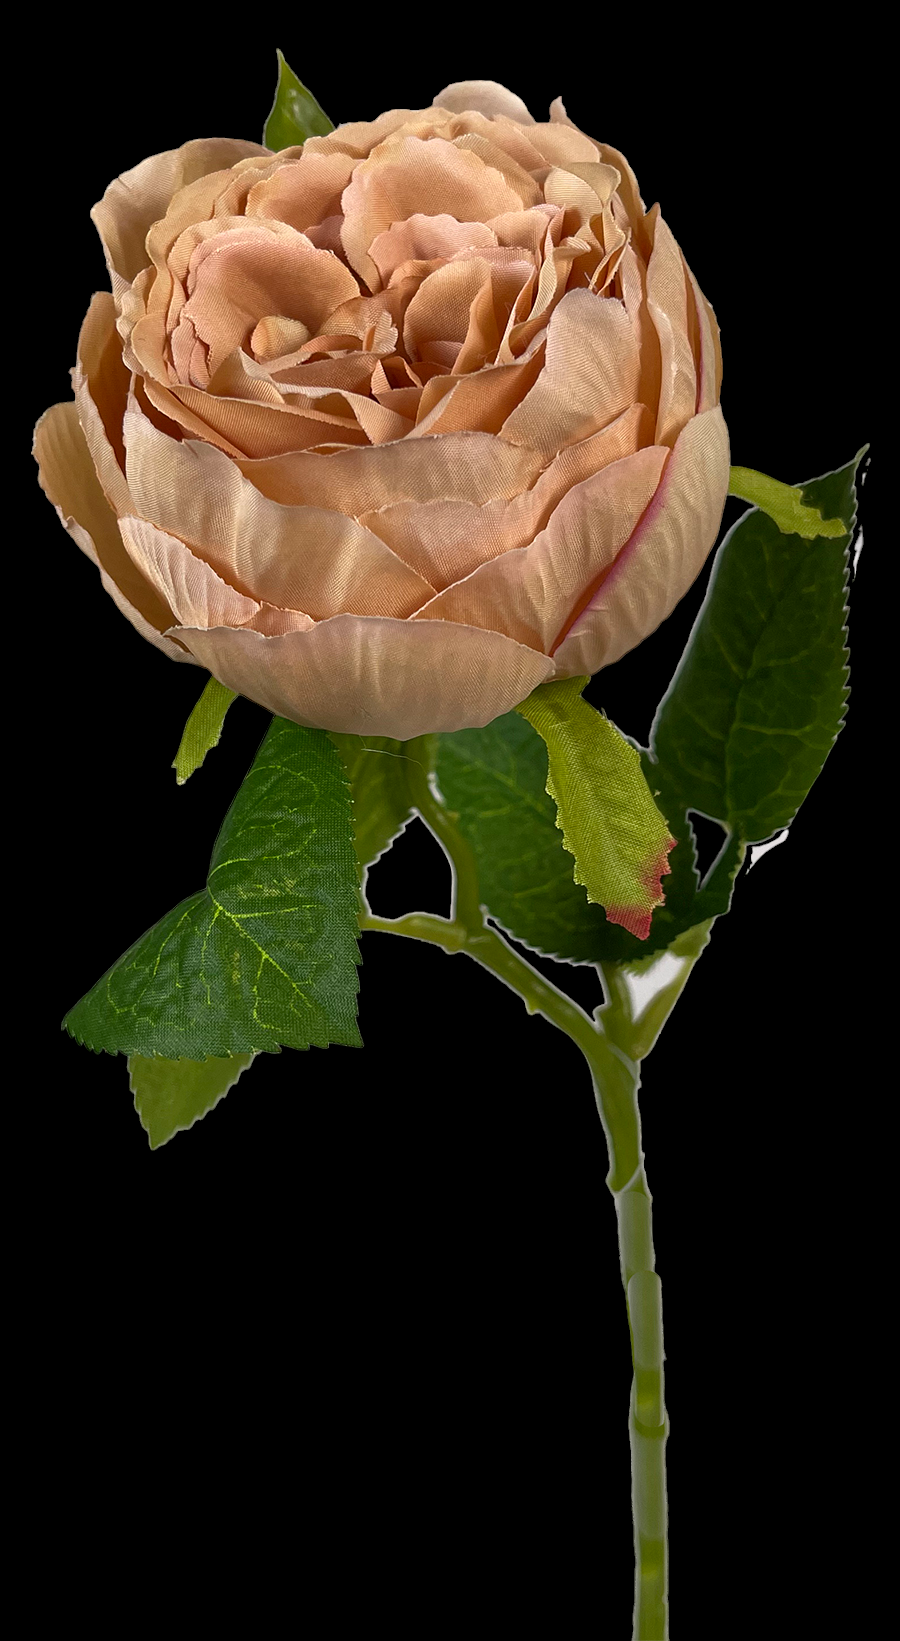 Toffy English Garden Rose Stem
17", 3.5" Bloom